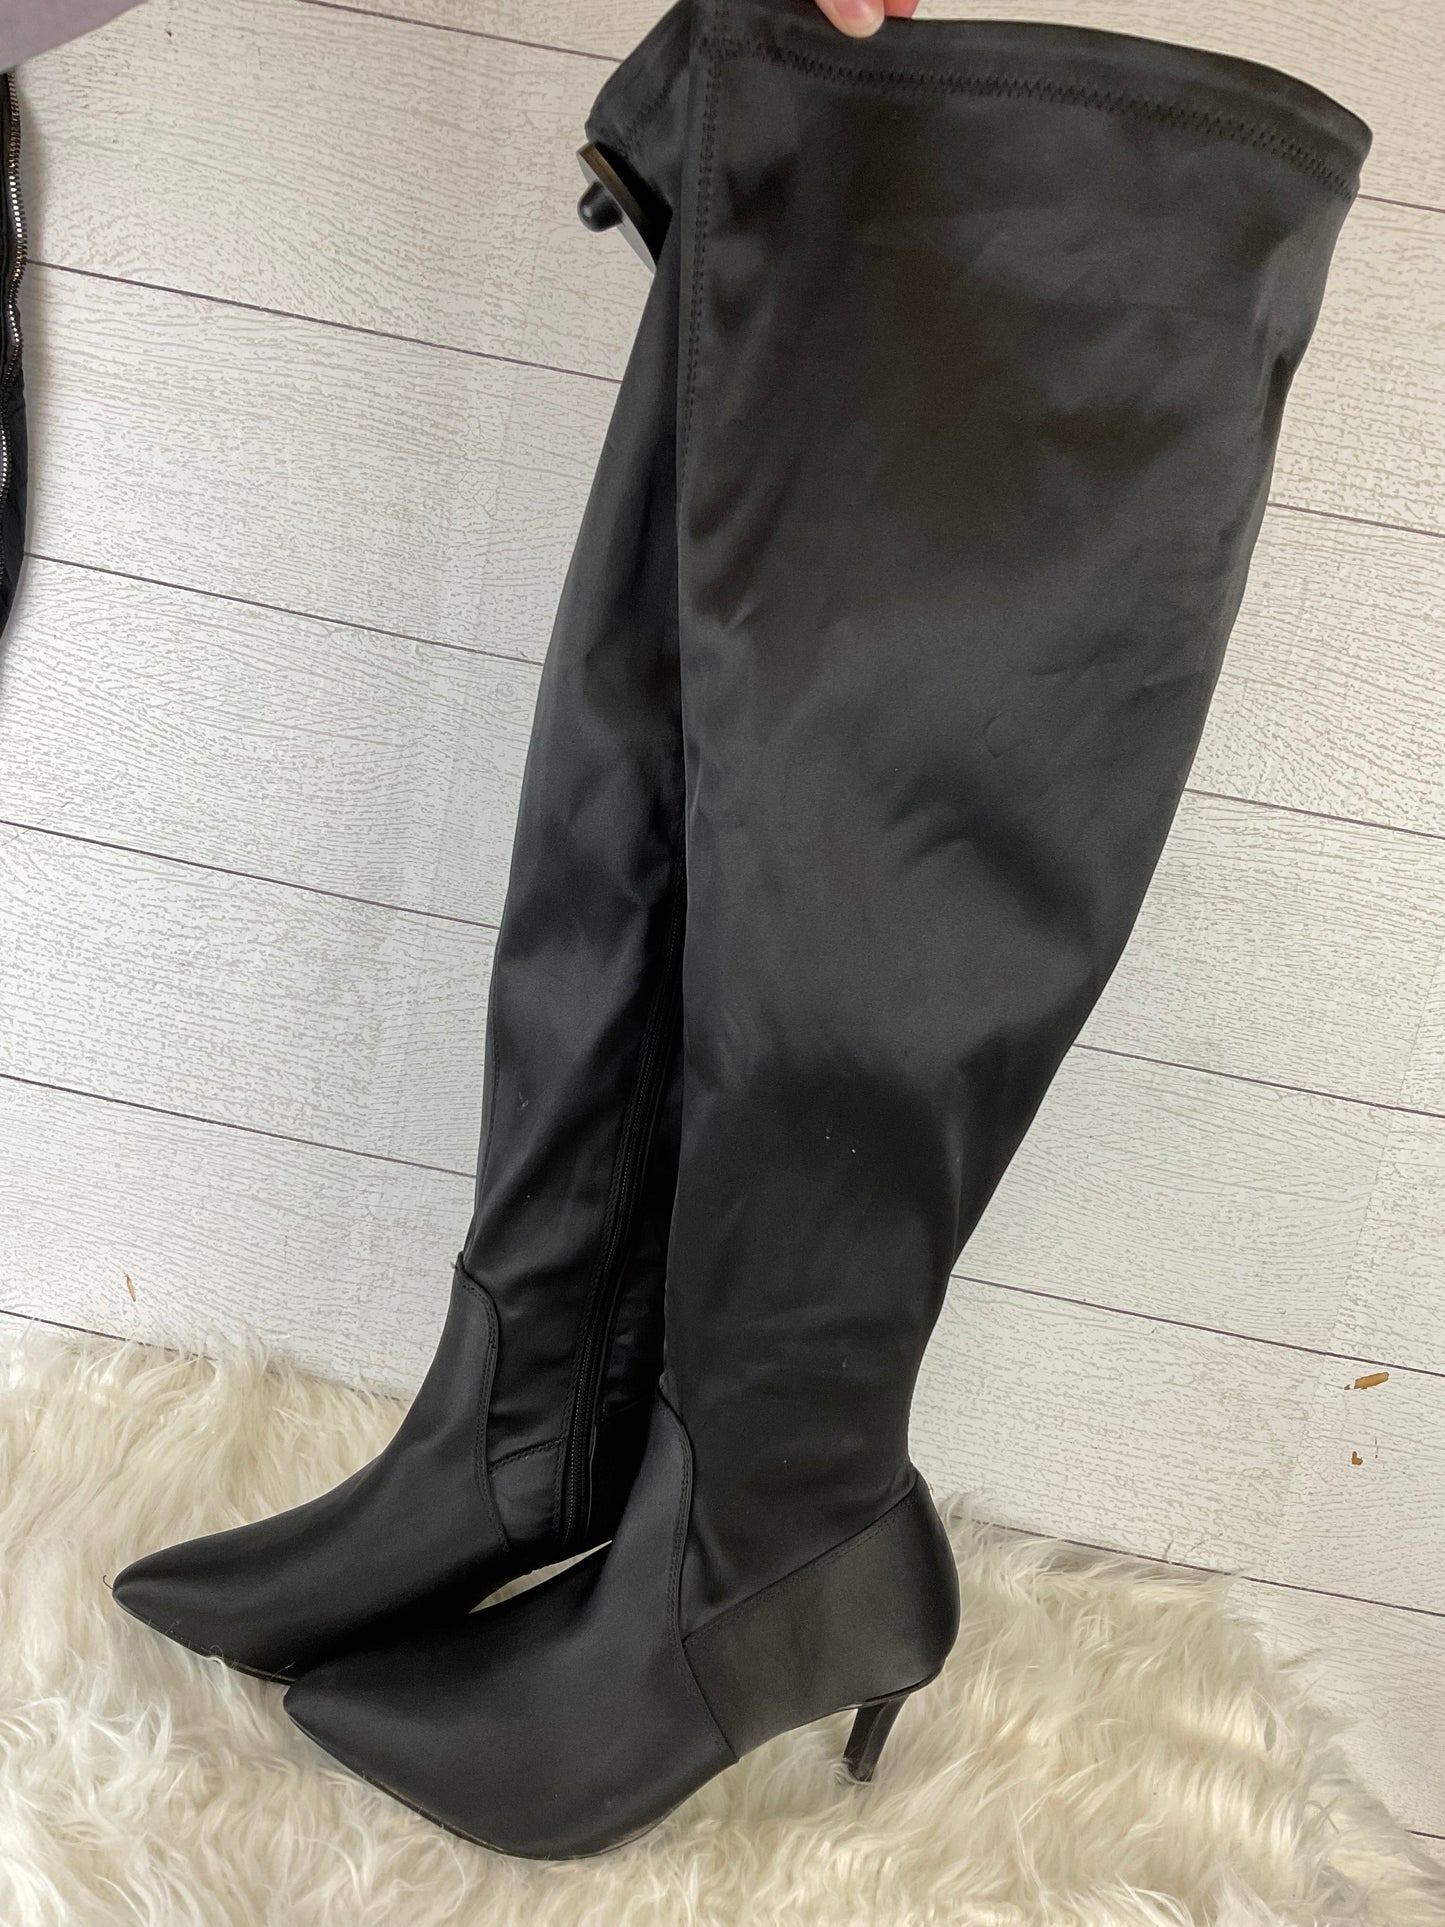 Boots Knee Heels By Torrid  Size: 8.5